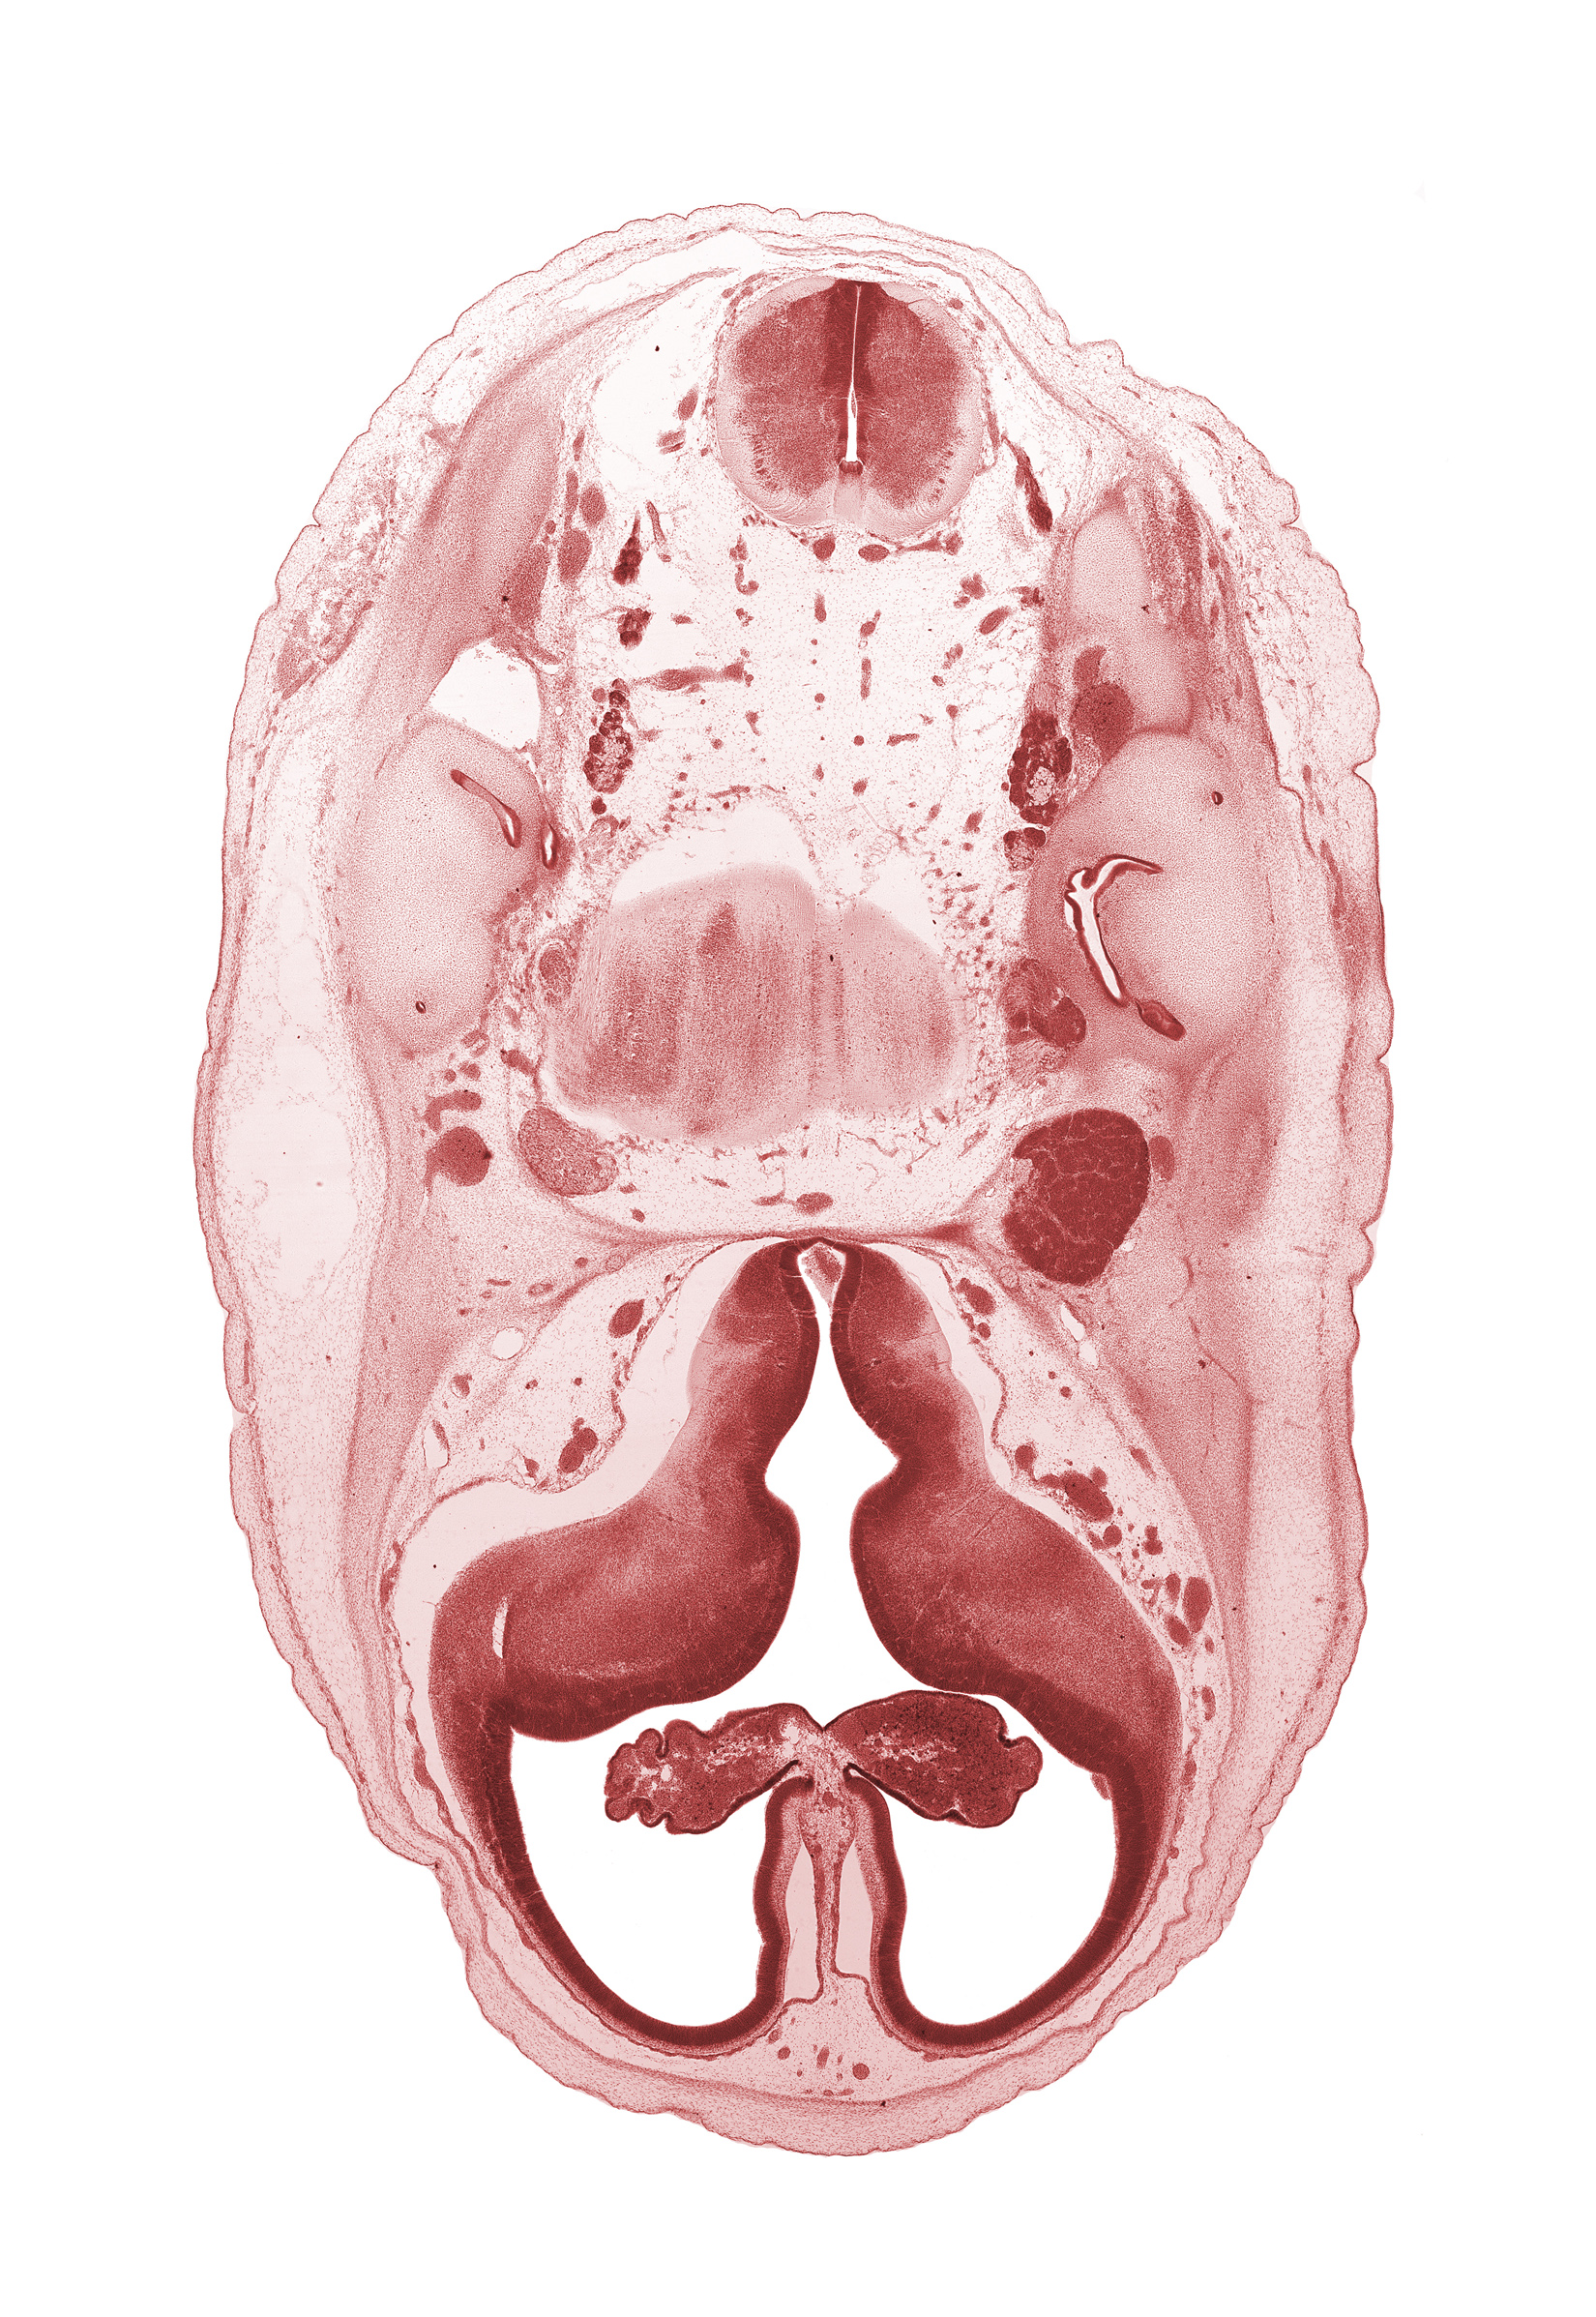 accessory nerve (CN XI), artifact separation(s), choroid plexus, facial nerve (CN VII), glossopharyngeal nerve (CN IX), hypothalamic sulcus, internal carotid artery, interventricular foramen, lateral ventricle, lateral ventricular eminence (telencephalon), medial ventricular eminence (diencephalon), myelencephalon (medulla oblongata), pons region (metencephalon), superior ganglion of vagus nerve (CN X), vestibulocochlear nerve (CN VIII)